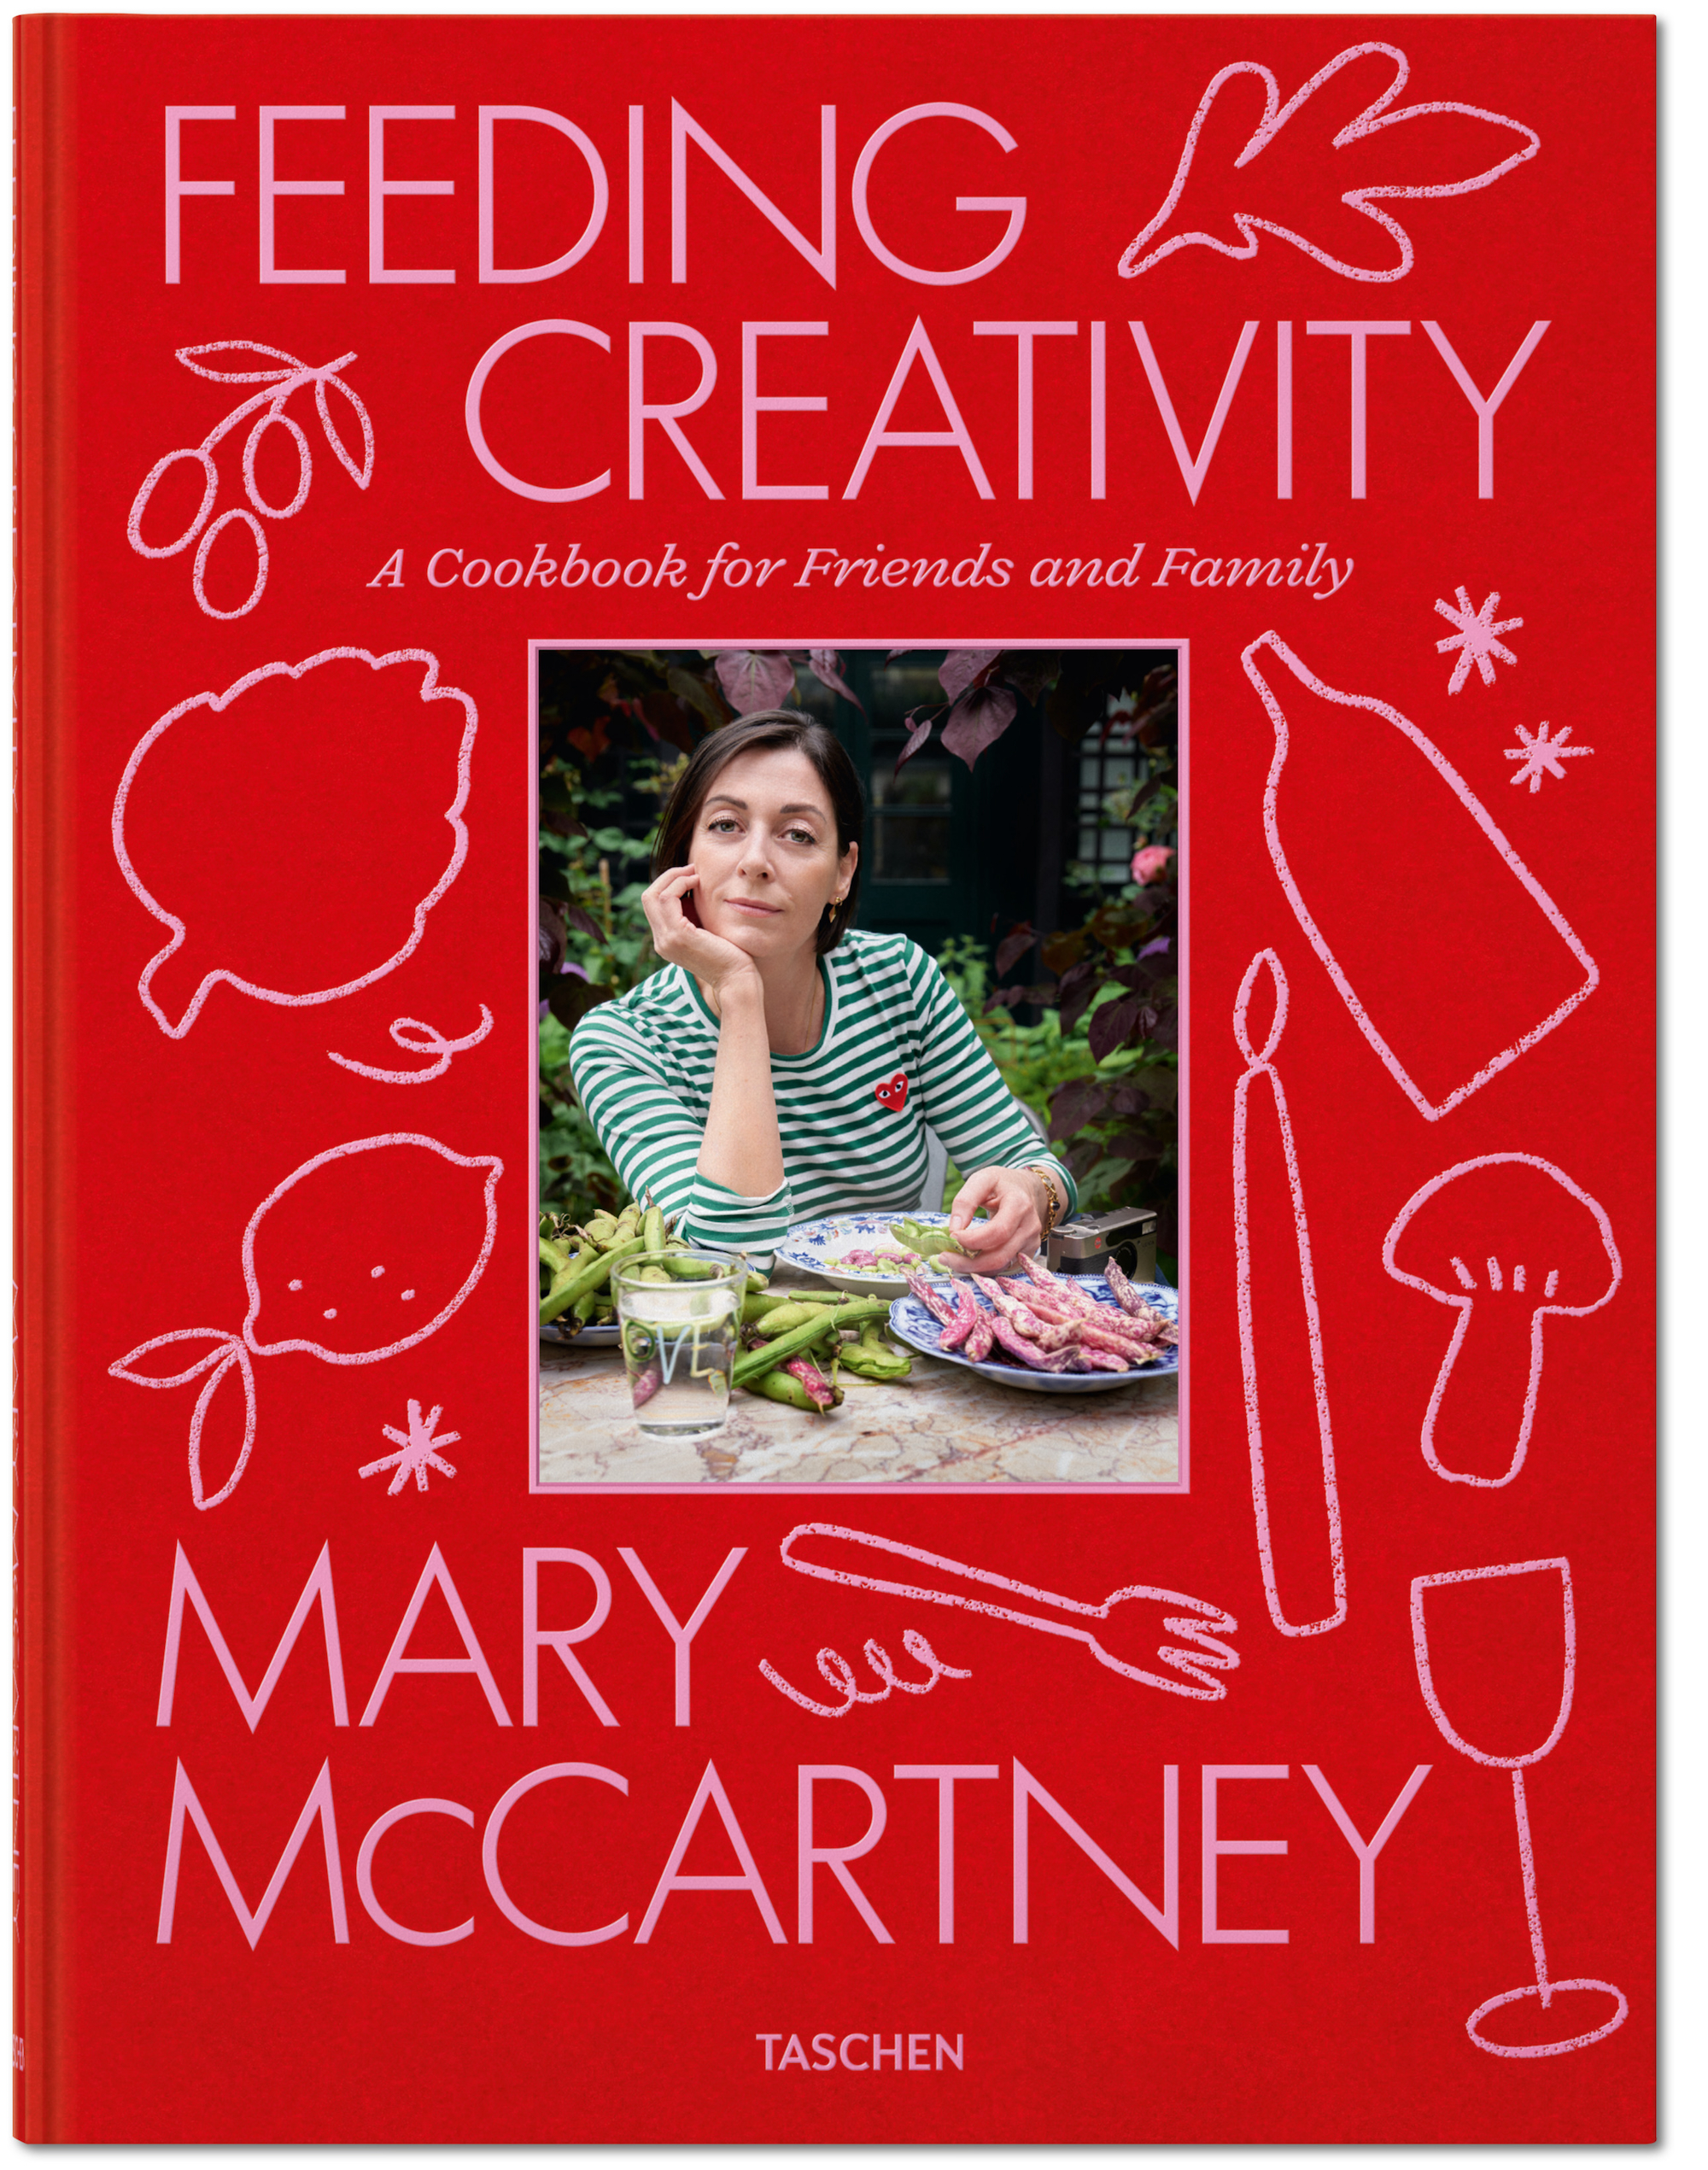 MARY MCCARTNEY FEEDING CREATIVITY FO GB 3D 05381